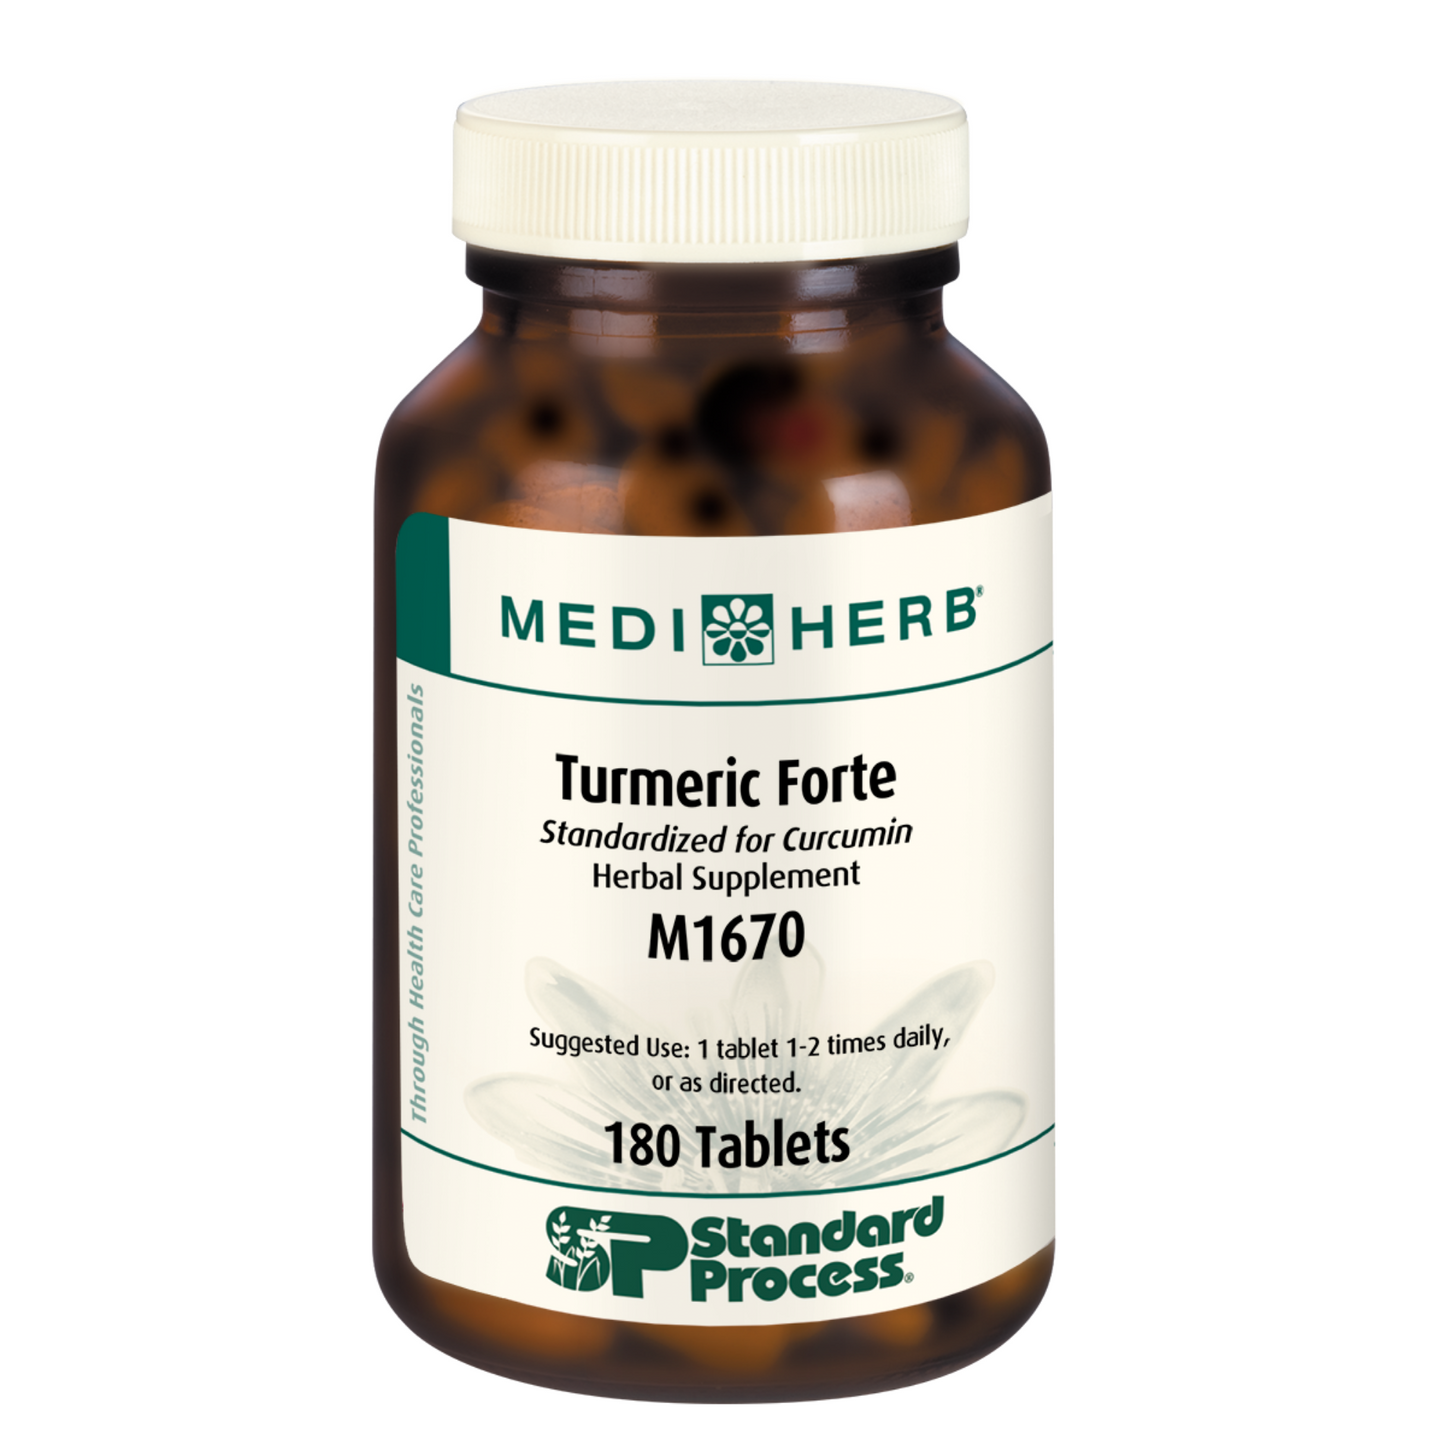 Primary image of Turmeric Forte